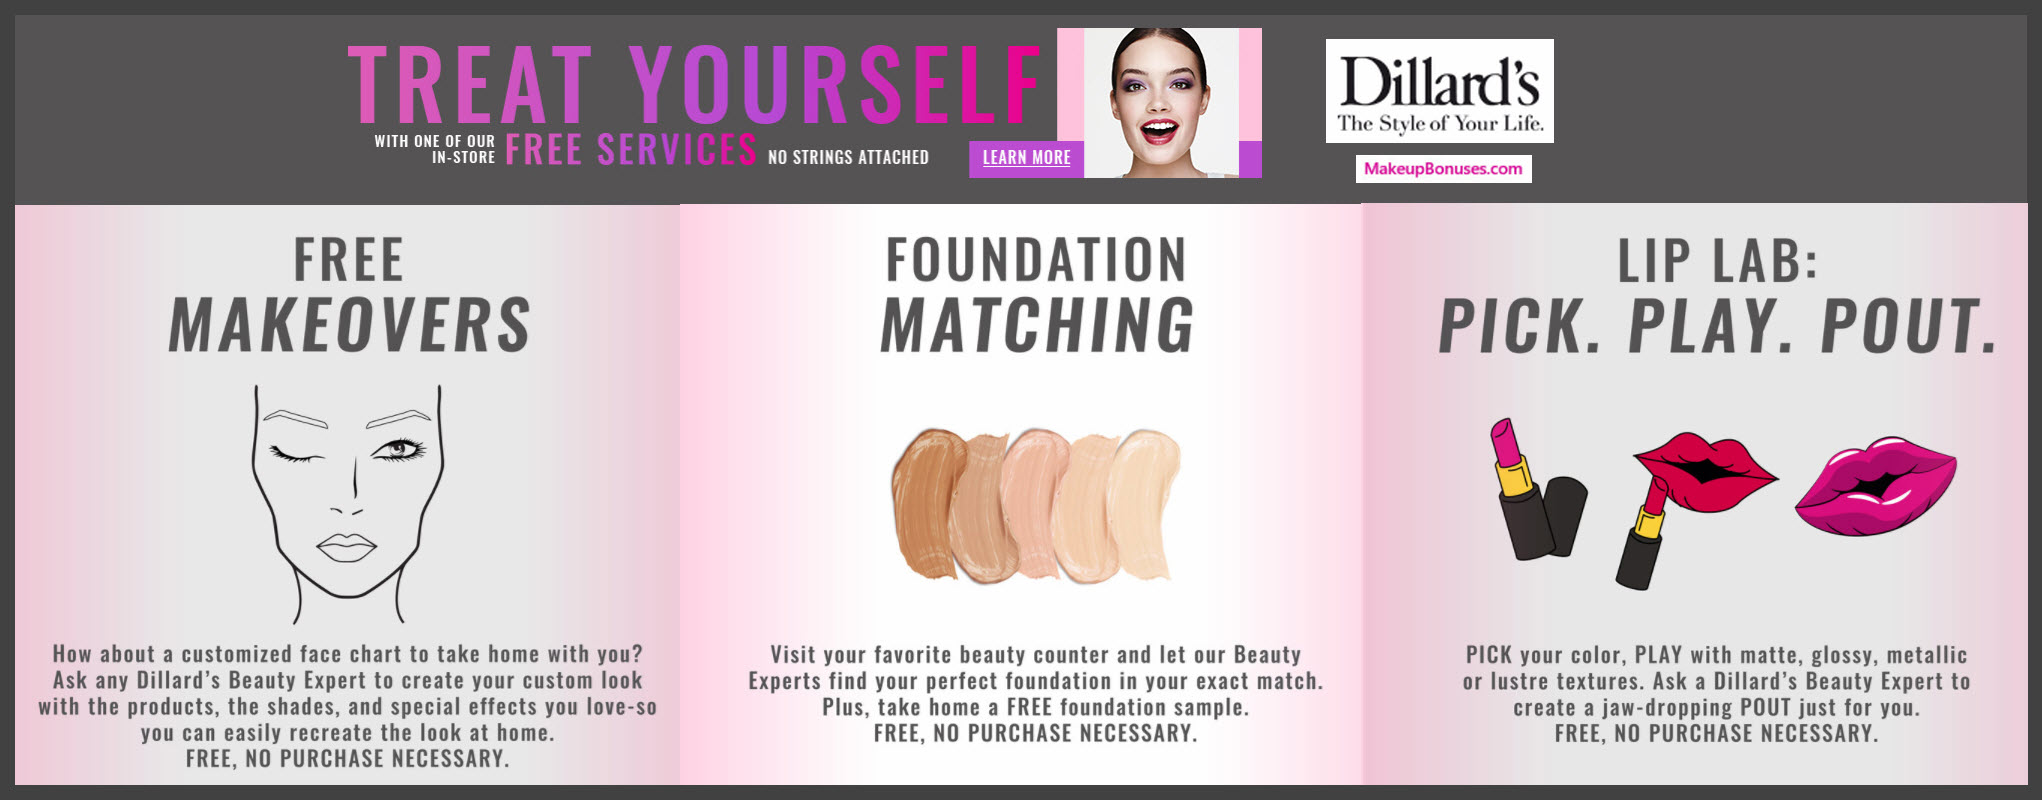 Dillard's Free Beauty Services - MakeupBonuses.com